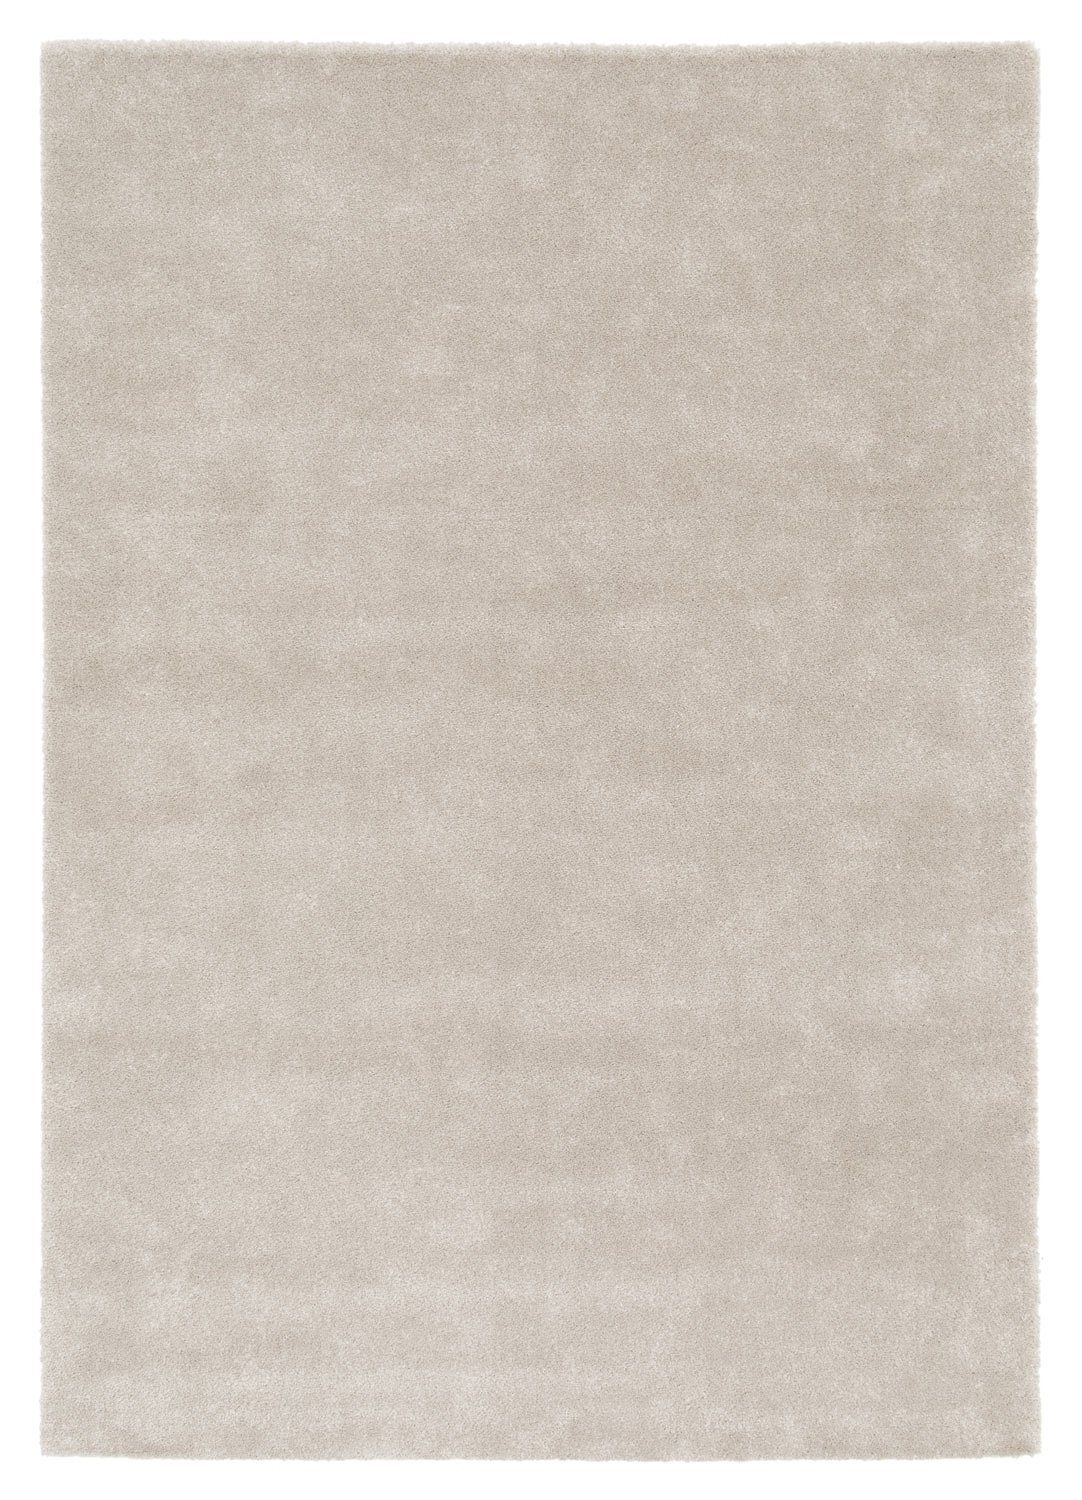 Teppich MOON, Polypropylen, Beige, 120 x 170 cm, Unifarben, Balta Rugs, rechteckig, Höhe: 17 mm